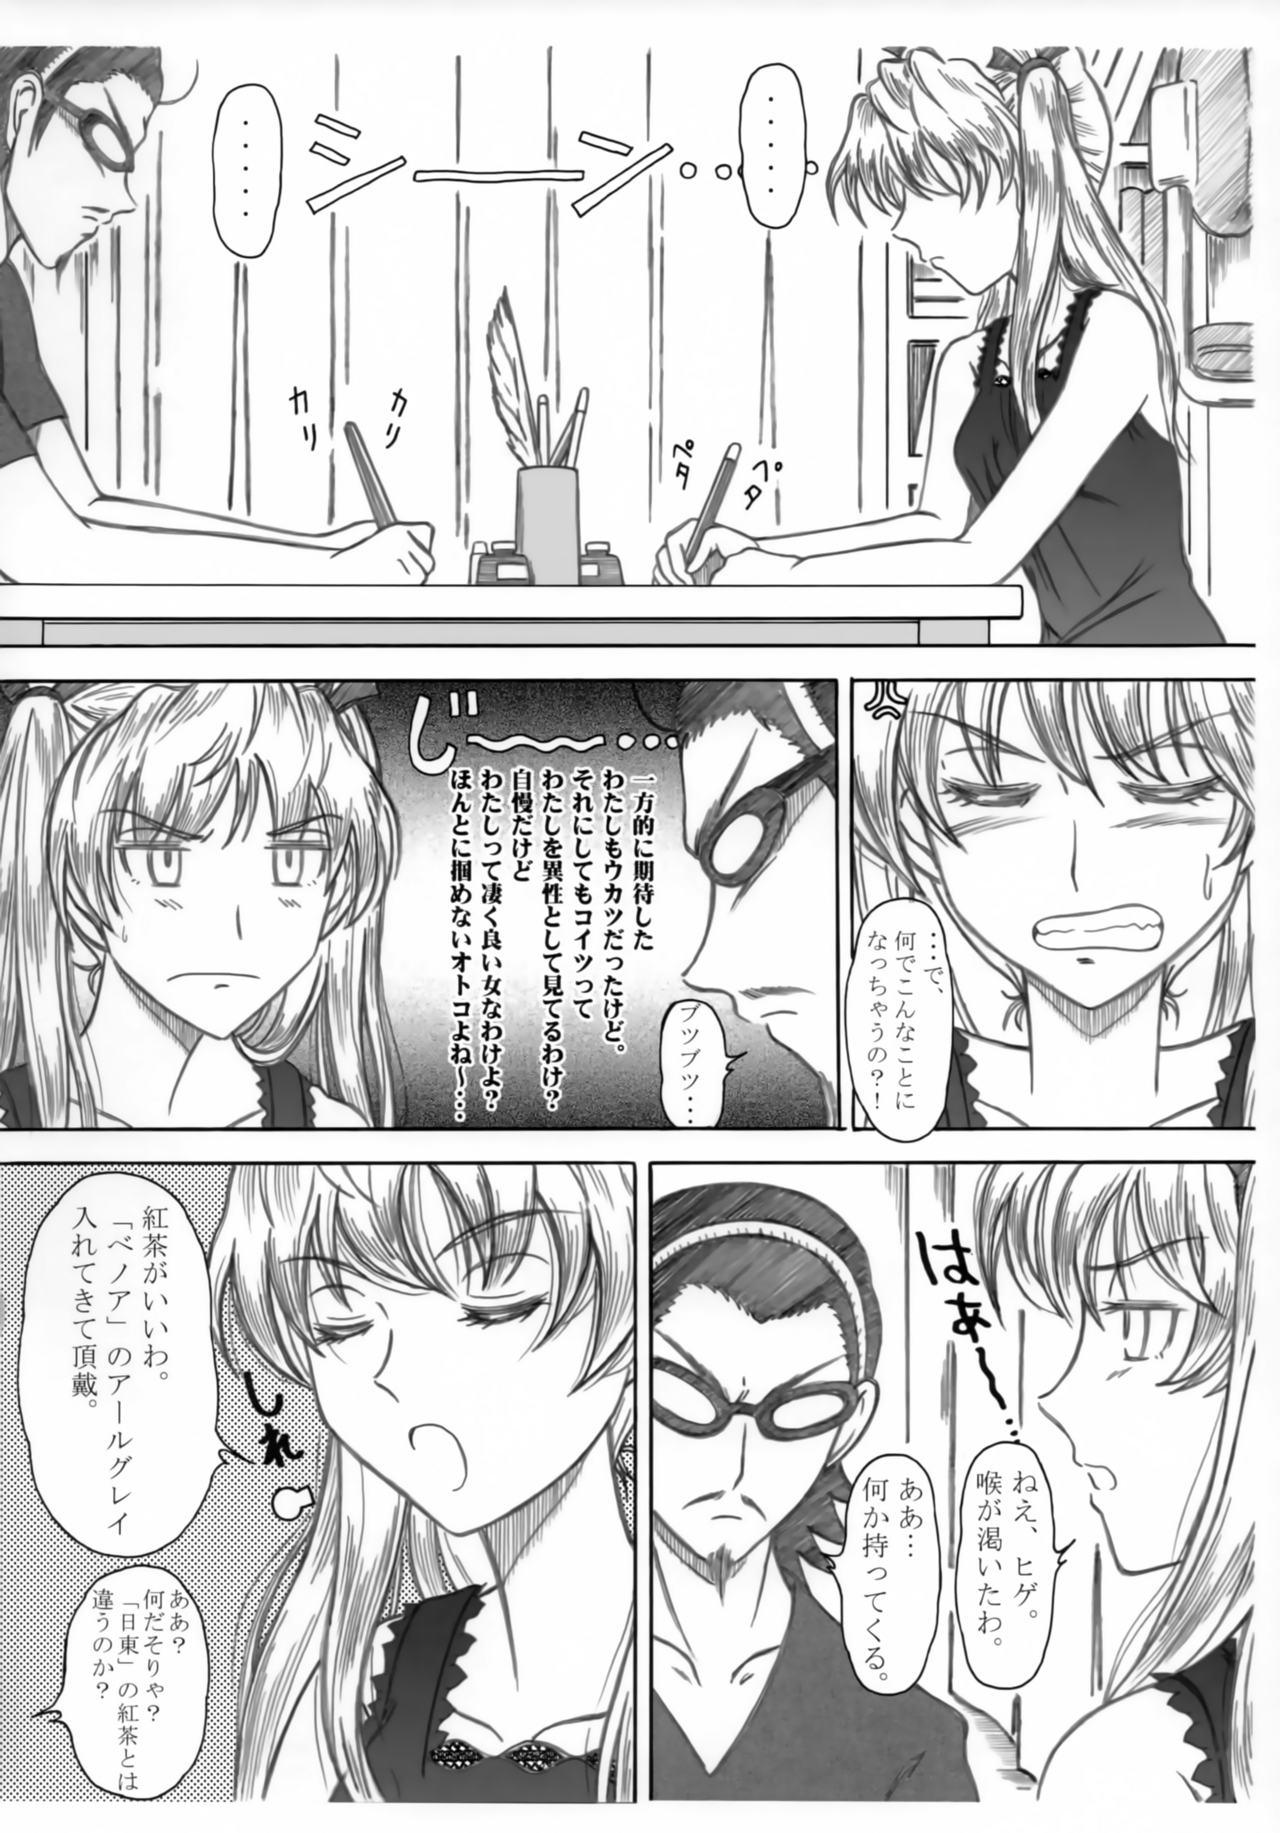 Cogida Seinen Hana To Ribon 32 - School rumble Safadinha - Page 5